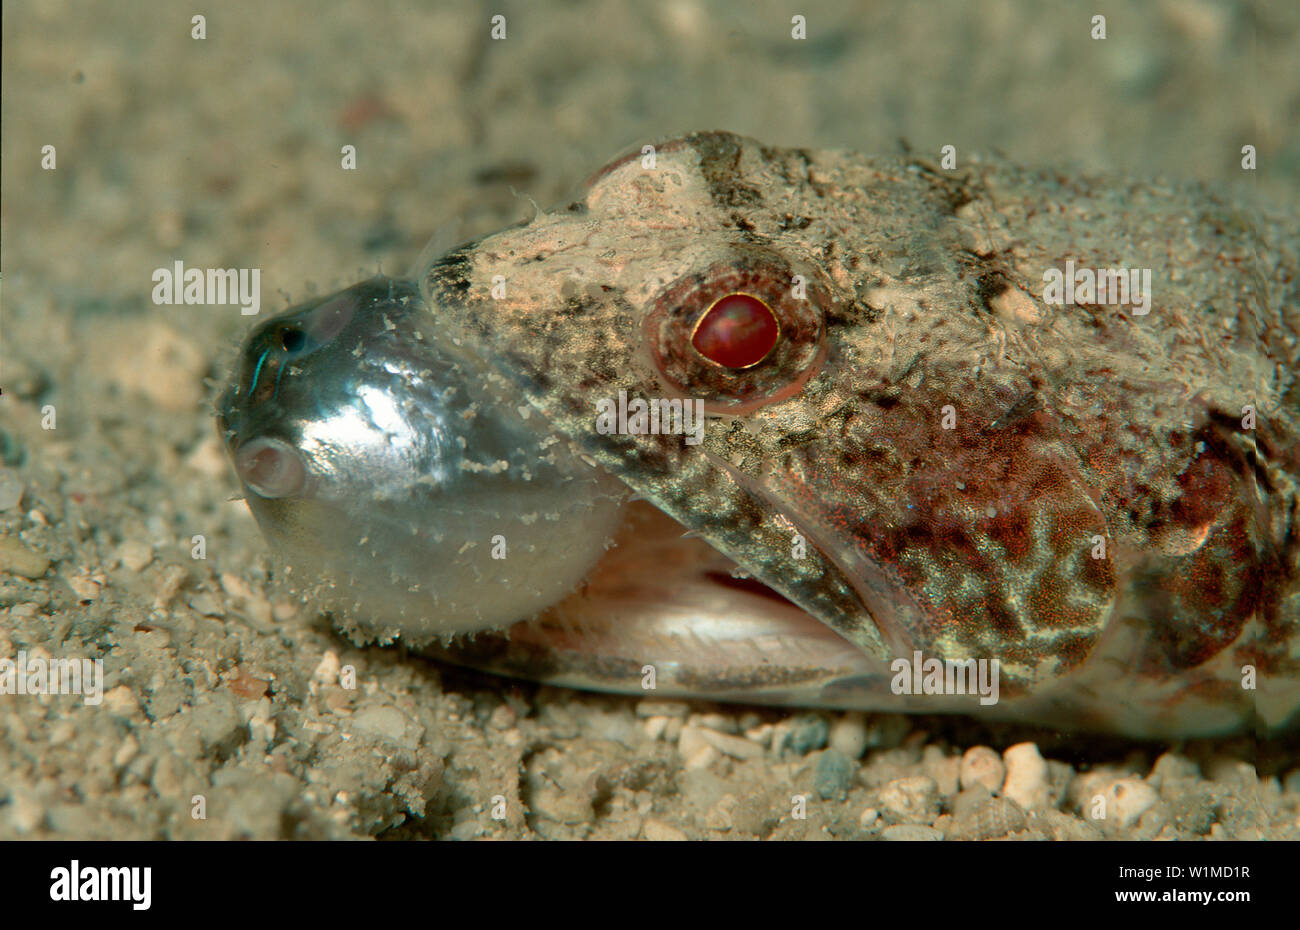 Eidechsenfisch frisst Kugelfisch, Reef lizardfish, Reef lizardfish eats pufferfish, Synodus variegatus, Arathron mappa Stock Photo